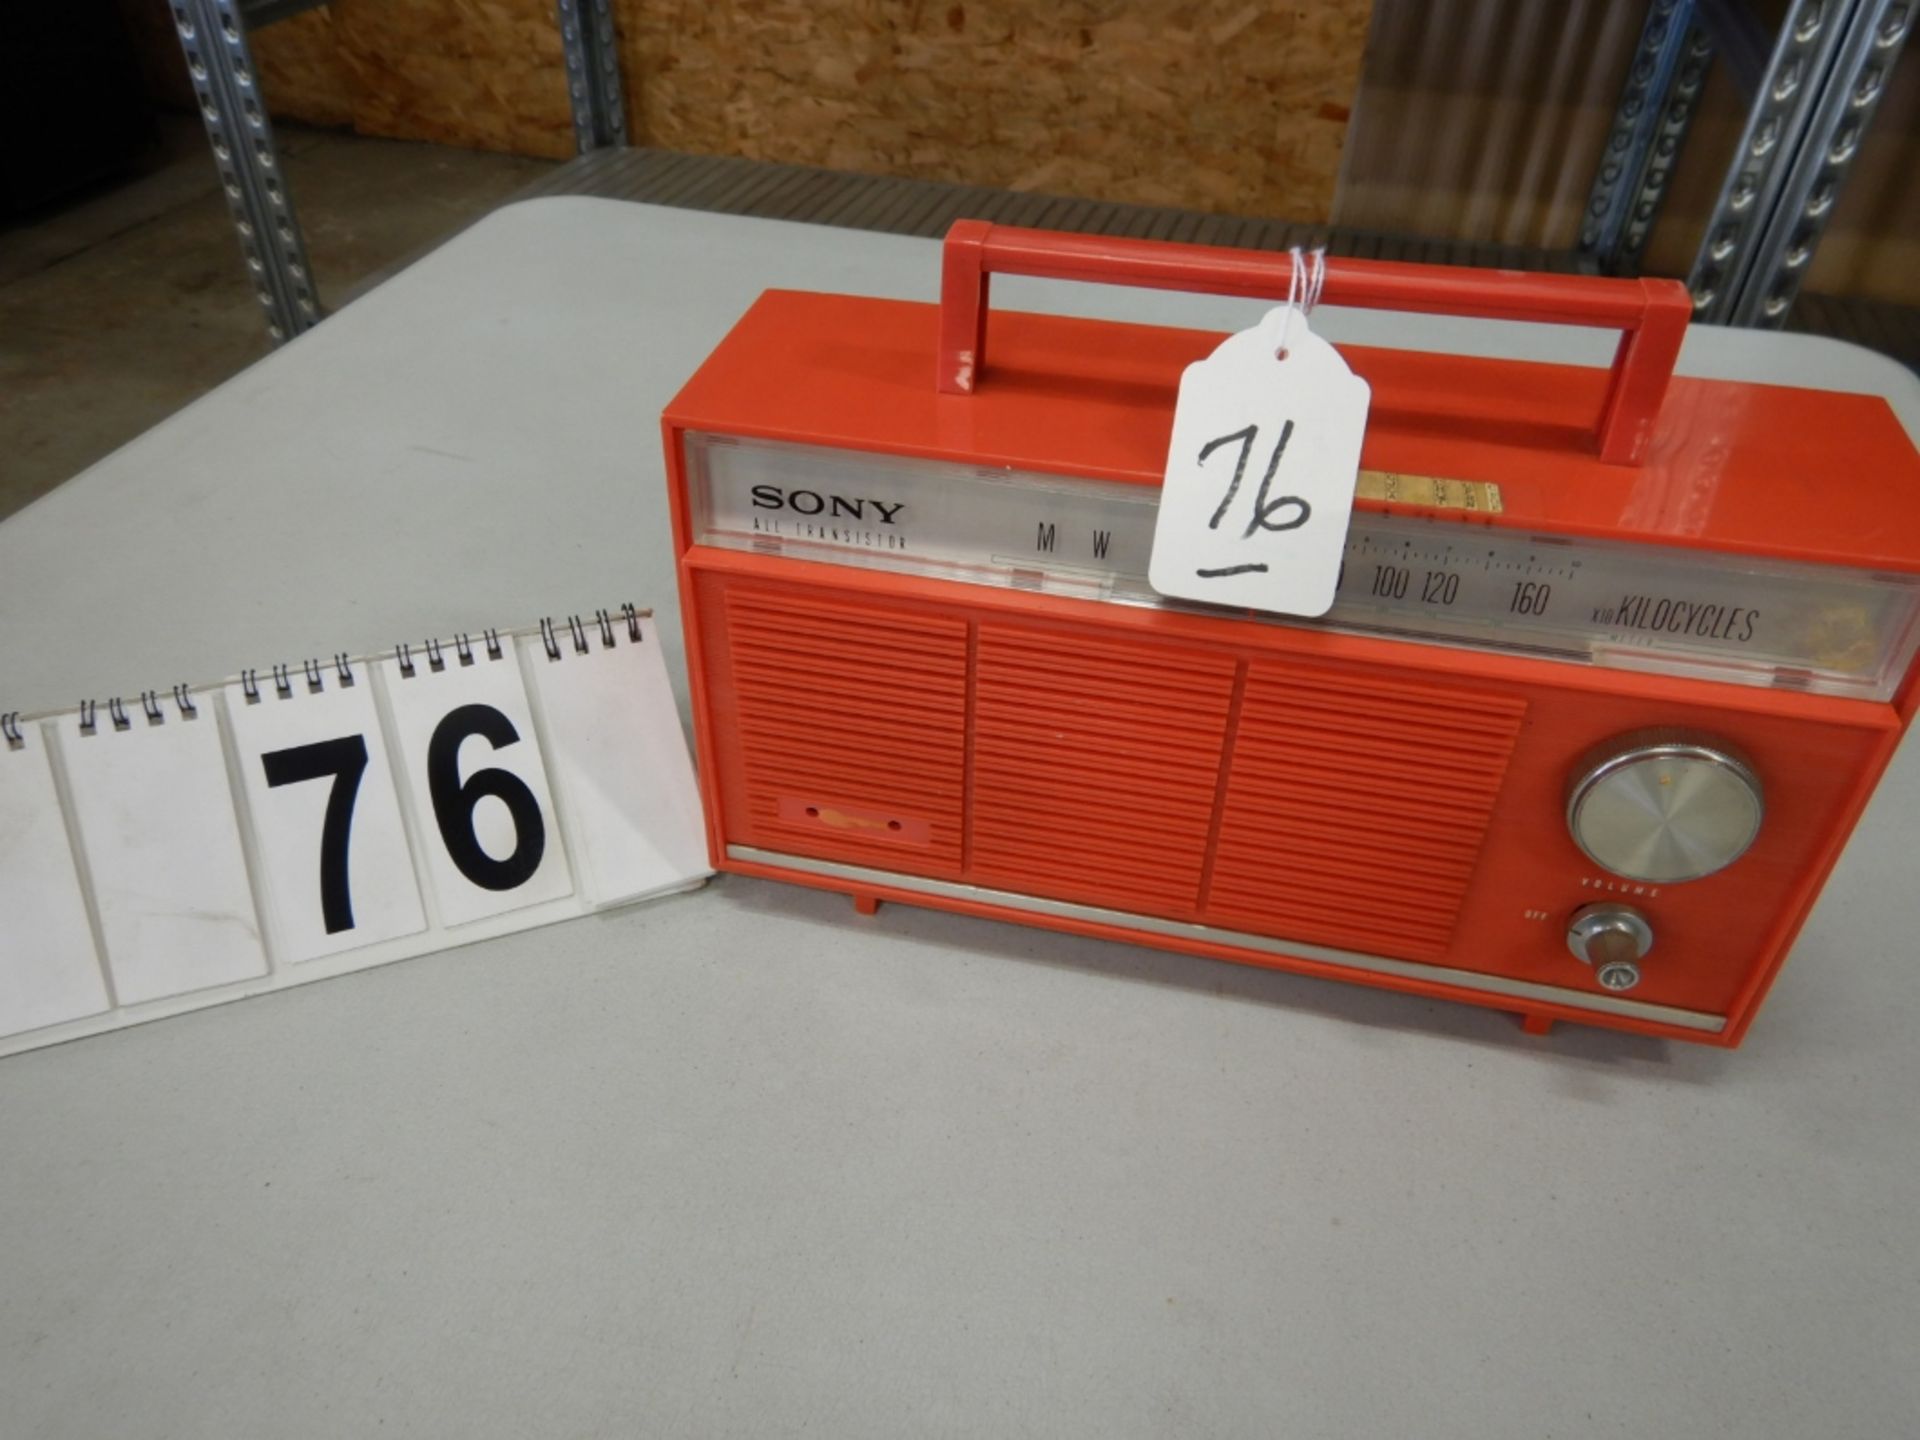 VINTAGE SONY ALL TRANSISTOR RADIO MODEL 8R-42, RED IN COLOR